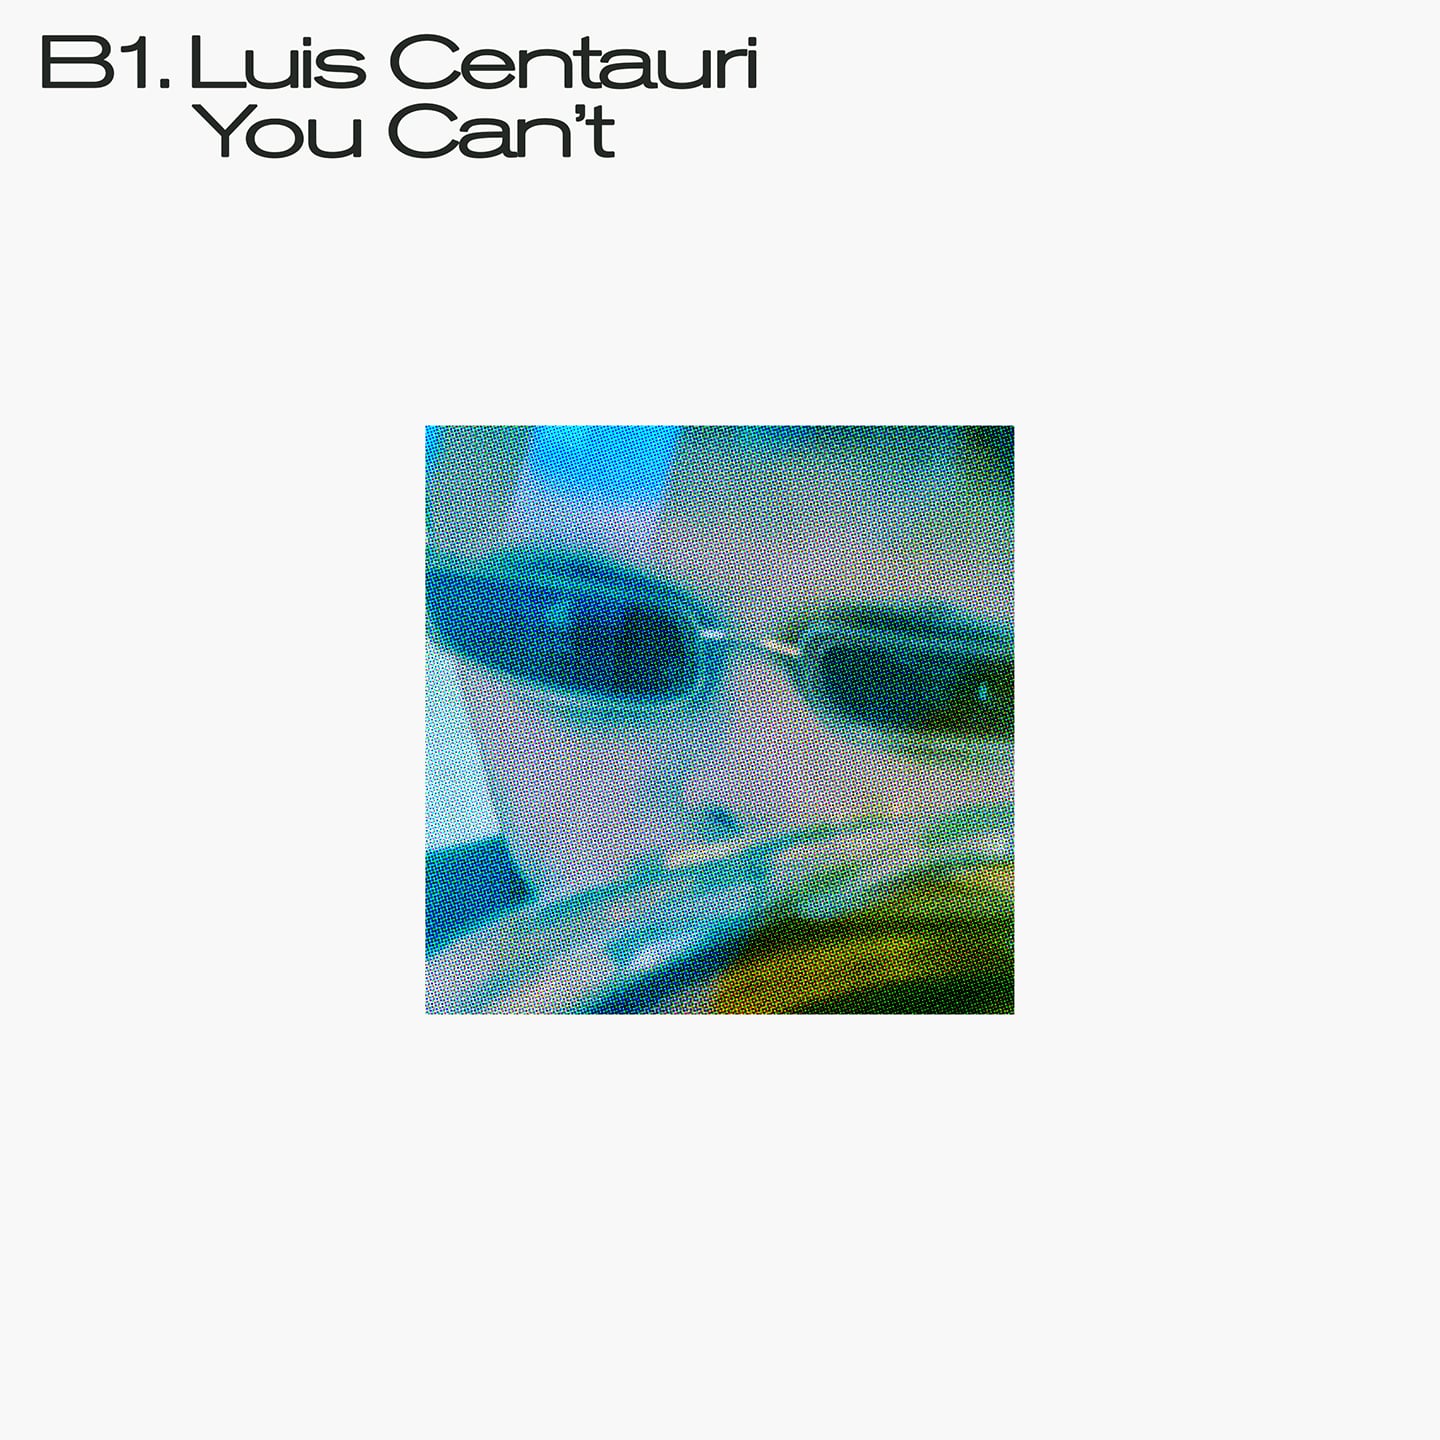 Luis Centauri - You Can't single trap electronic music dance bass